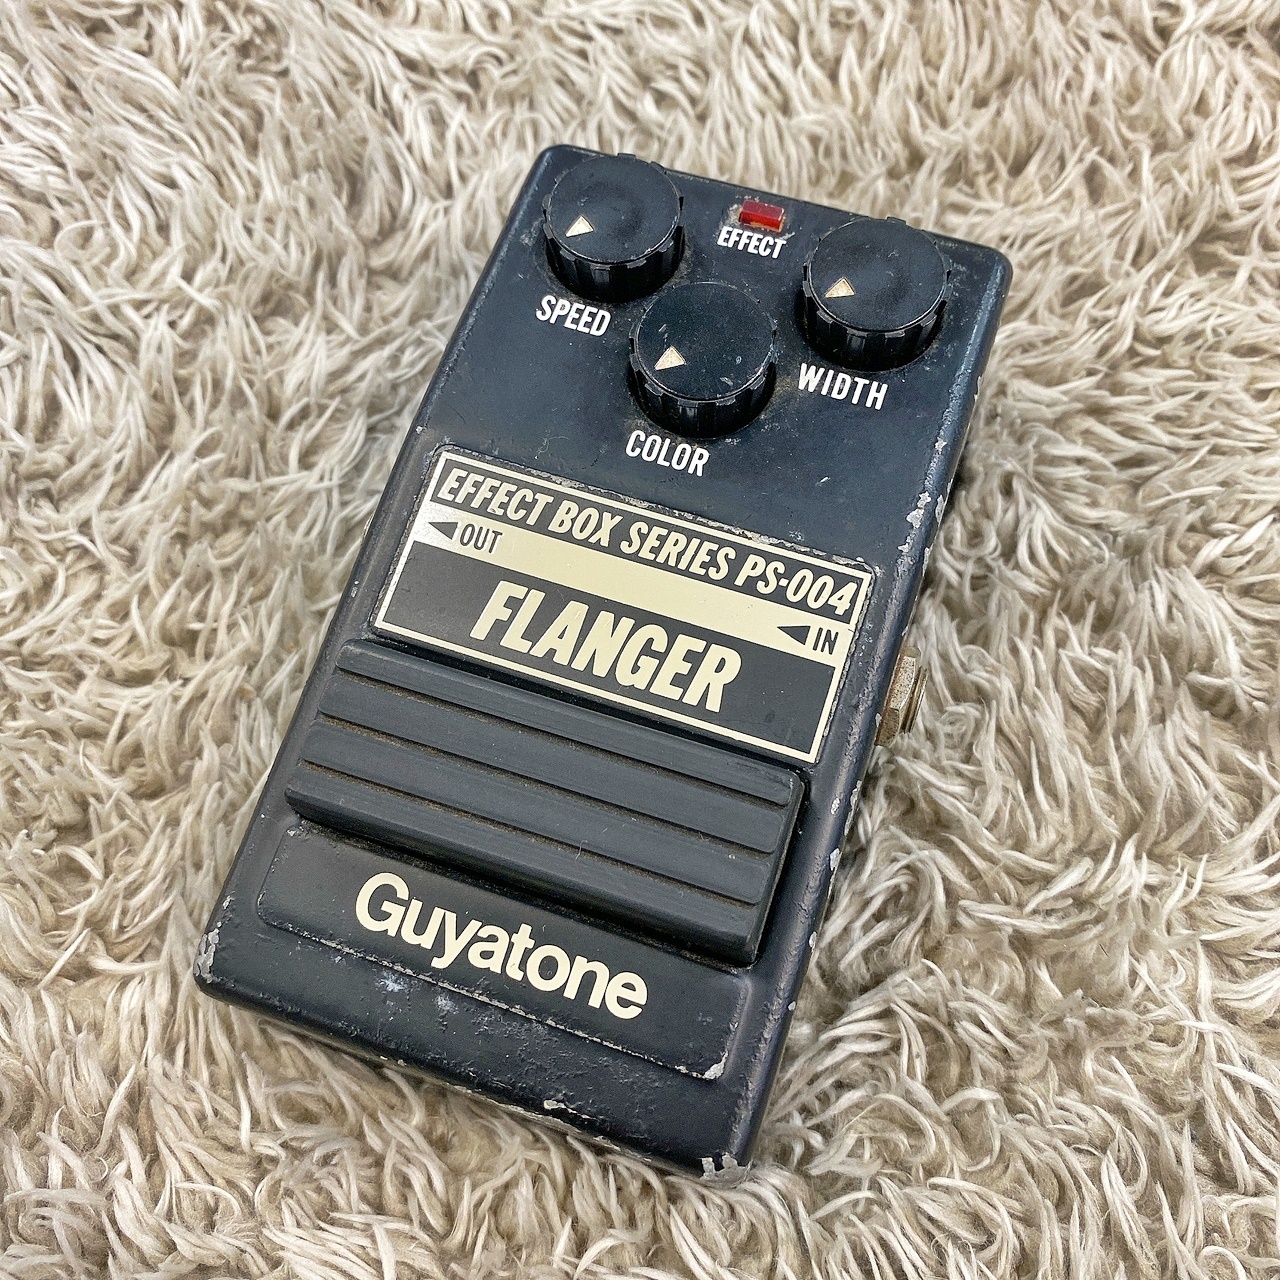 Guyatone PS-004 Flanger Japan Vintage